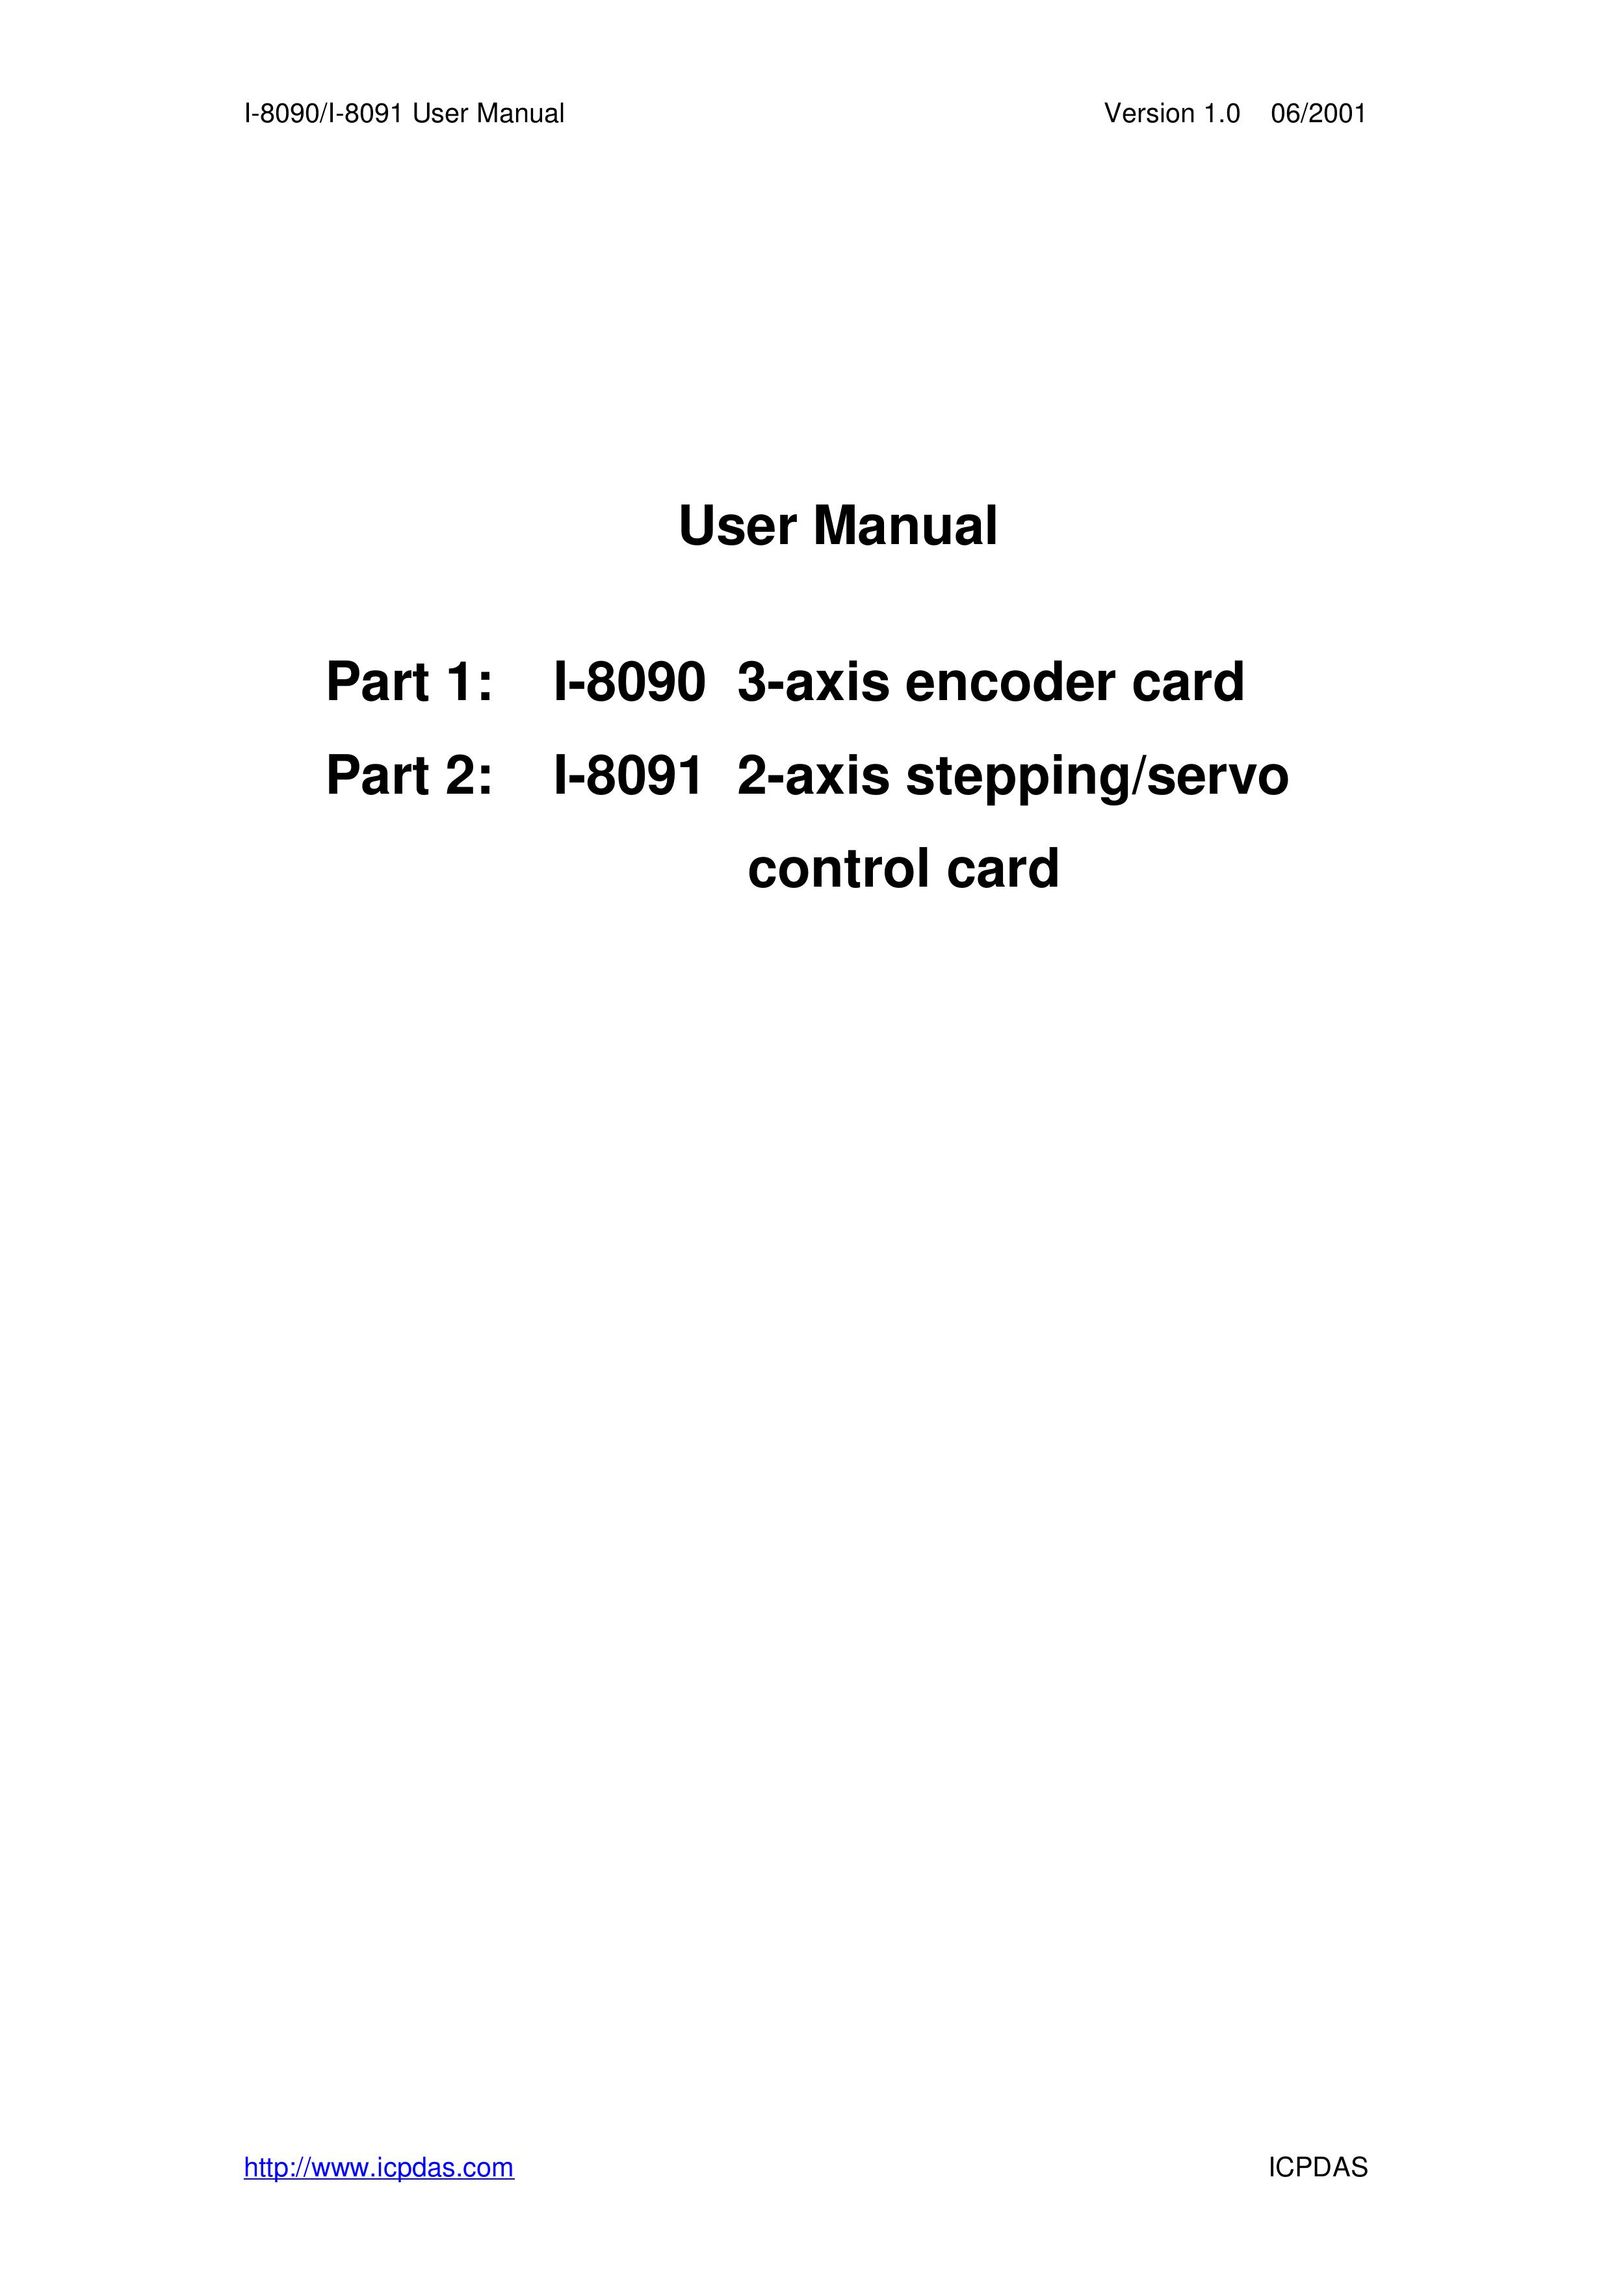 ICP DAS USA I-8090 3-axis encoder card Computer Hardware User Manual